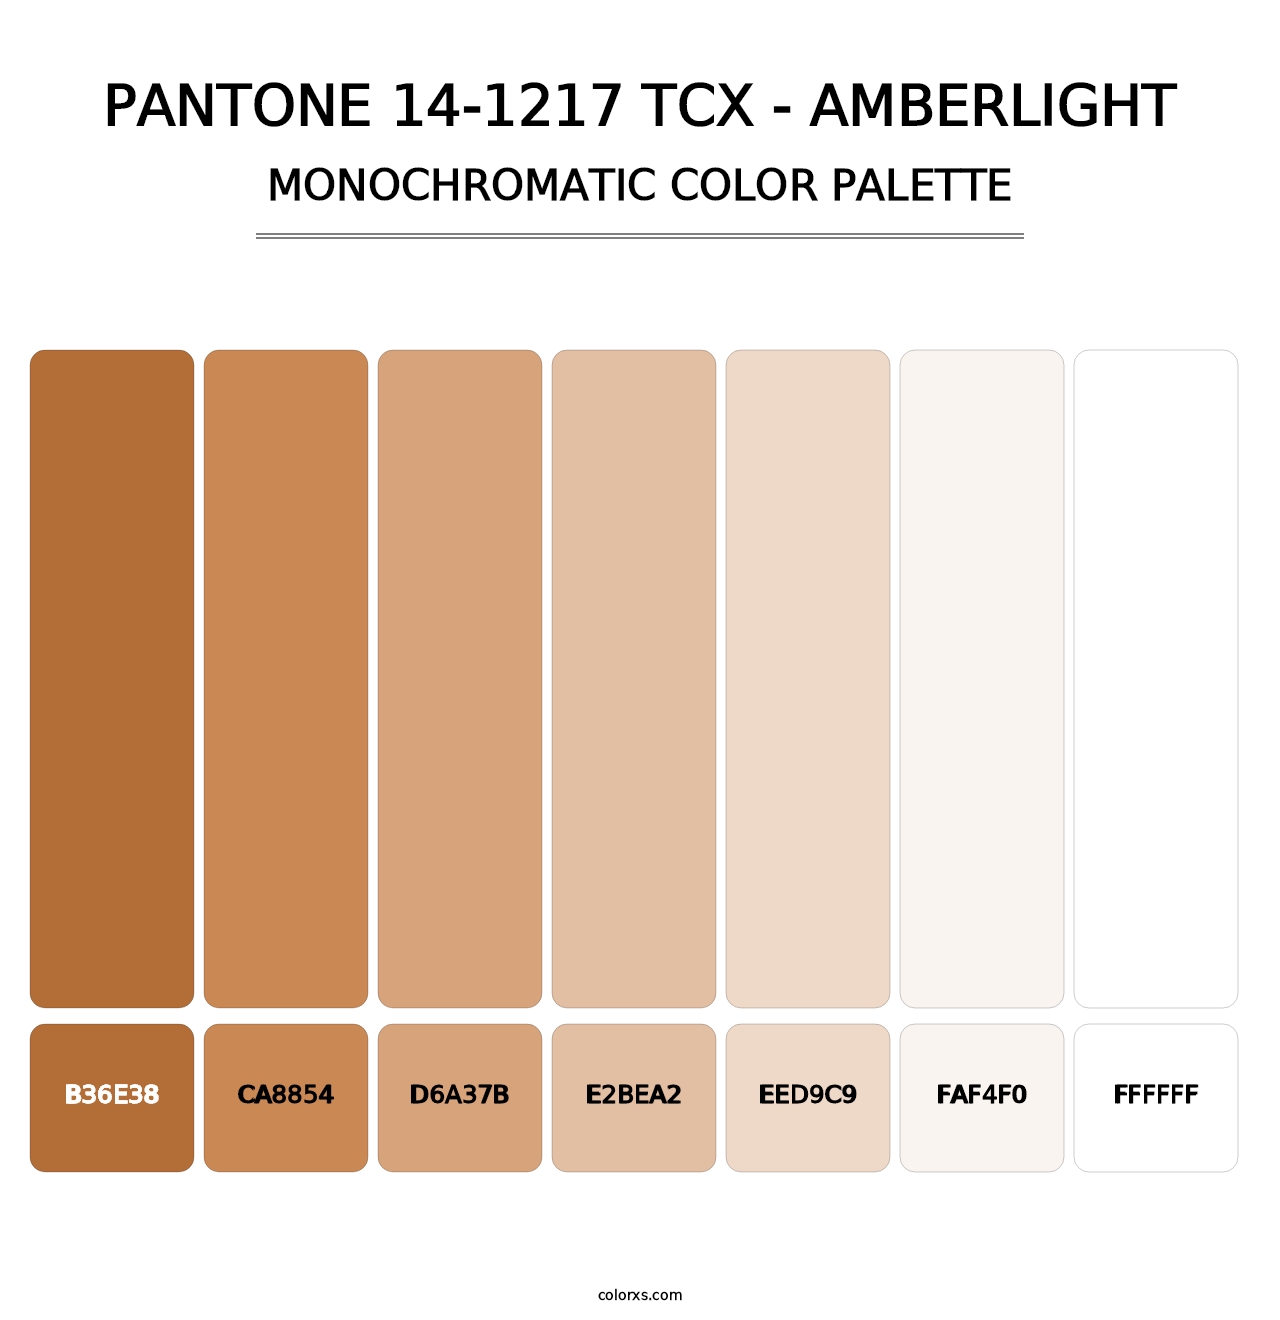 PANTONE 14-1217 TCX - Amberlight - Monochromatic Color Palette